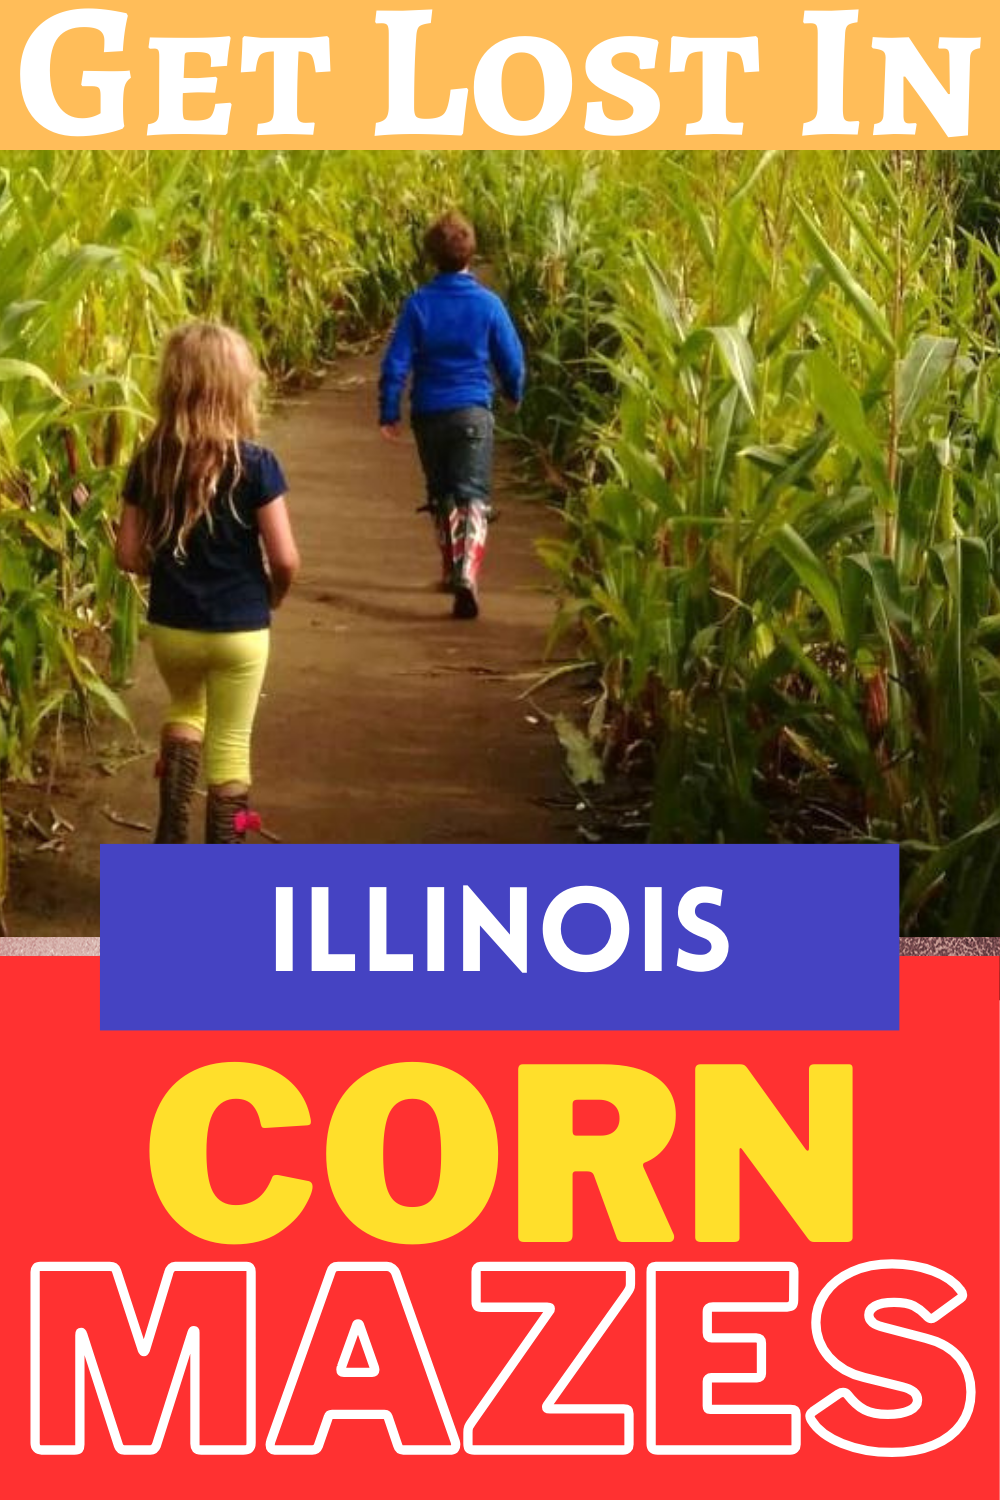 corn mazes in Illinois